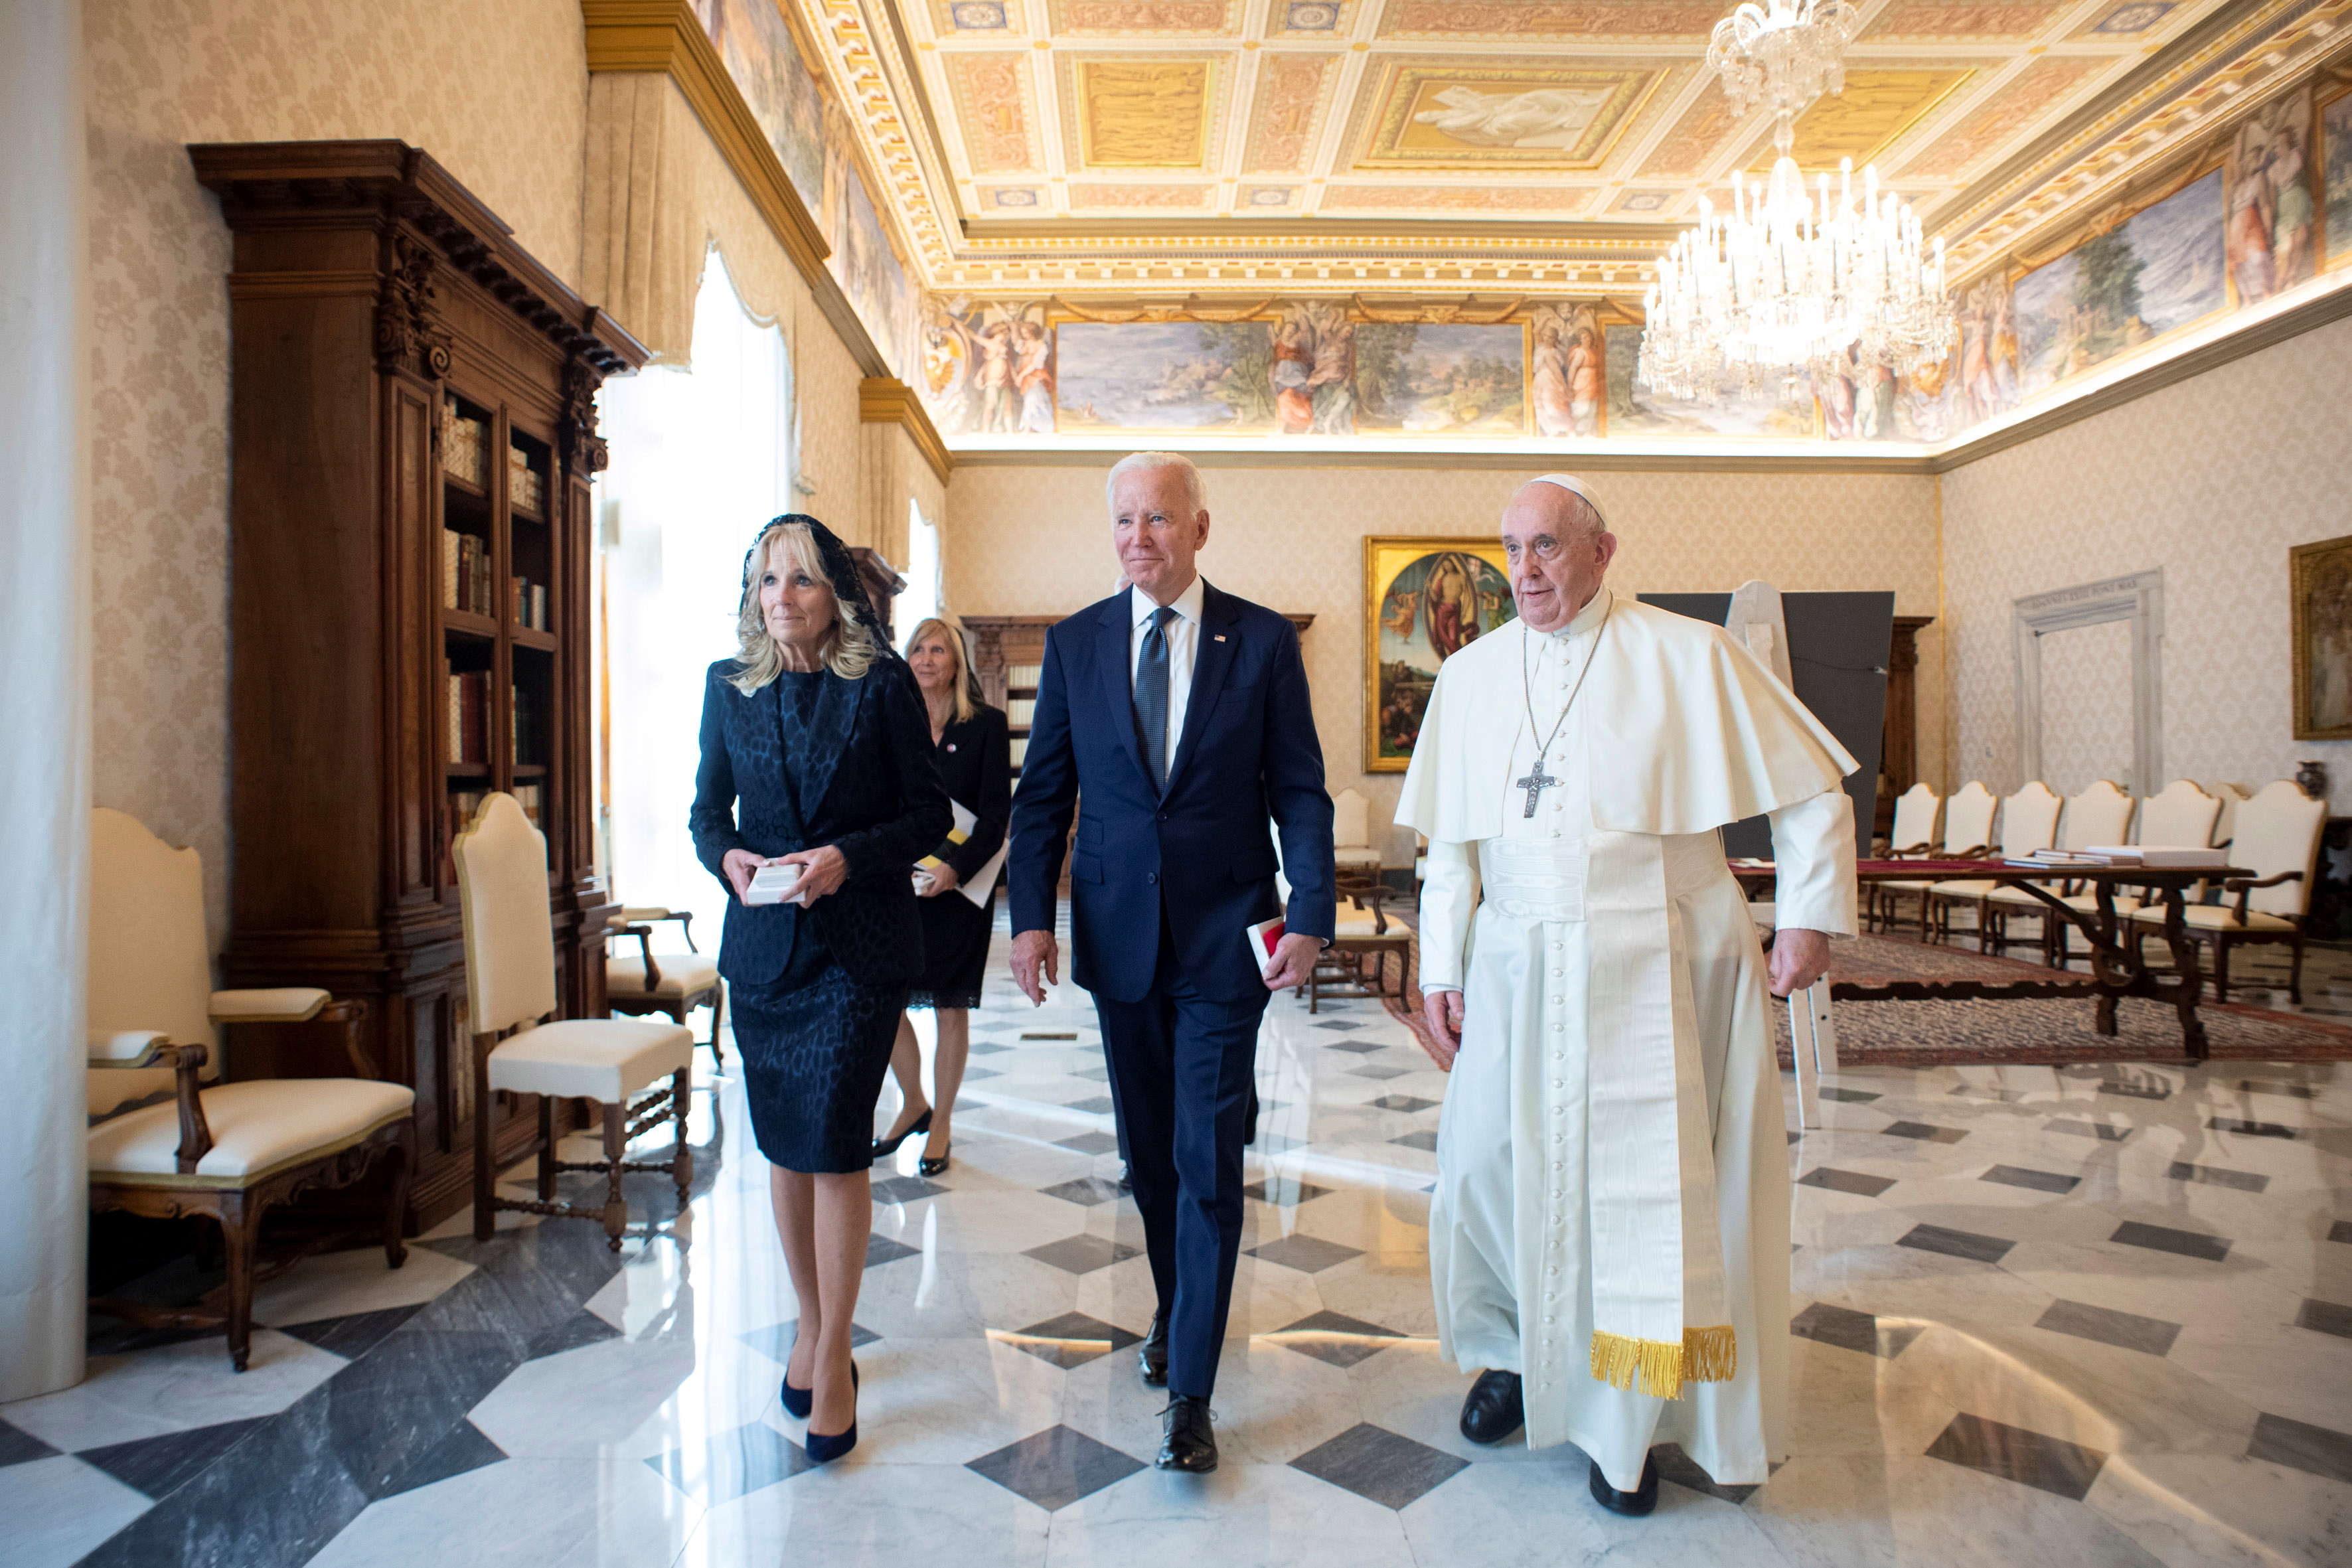 Pope Francis meets U.S. President Joe Biden and first lady Jill Biden at the Vatican